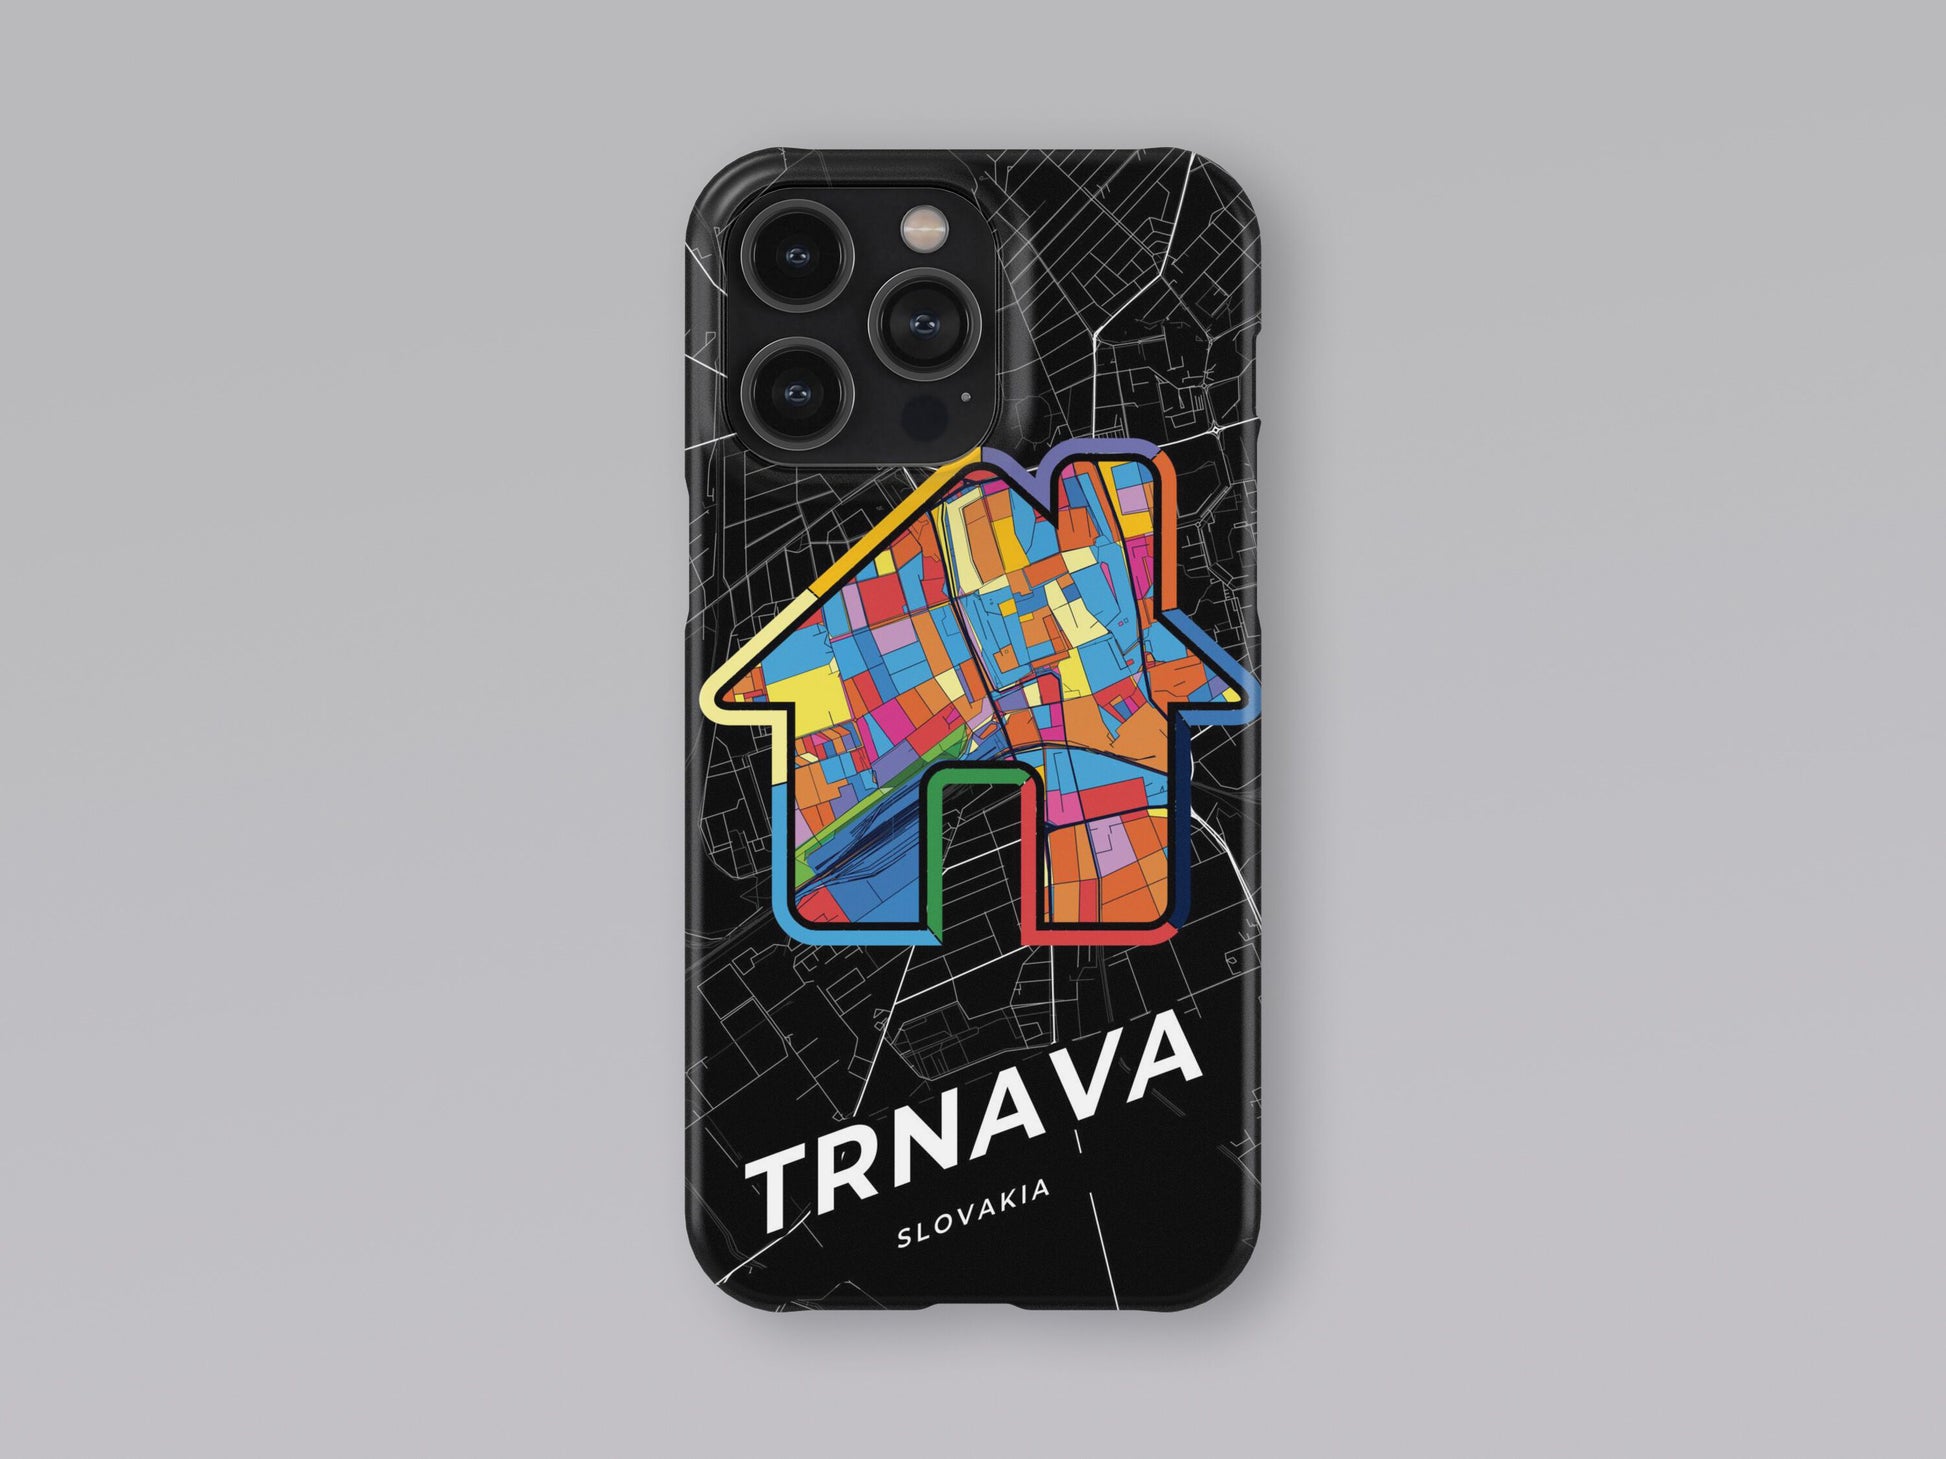 Trnava Slovakia slim phone case with colorful icon 3